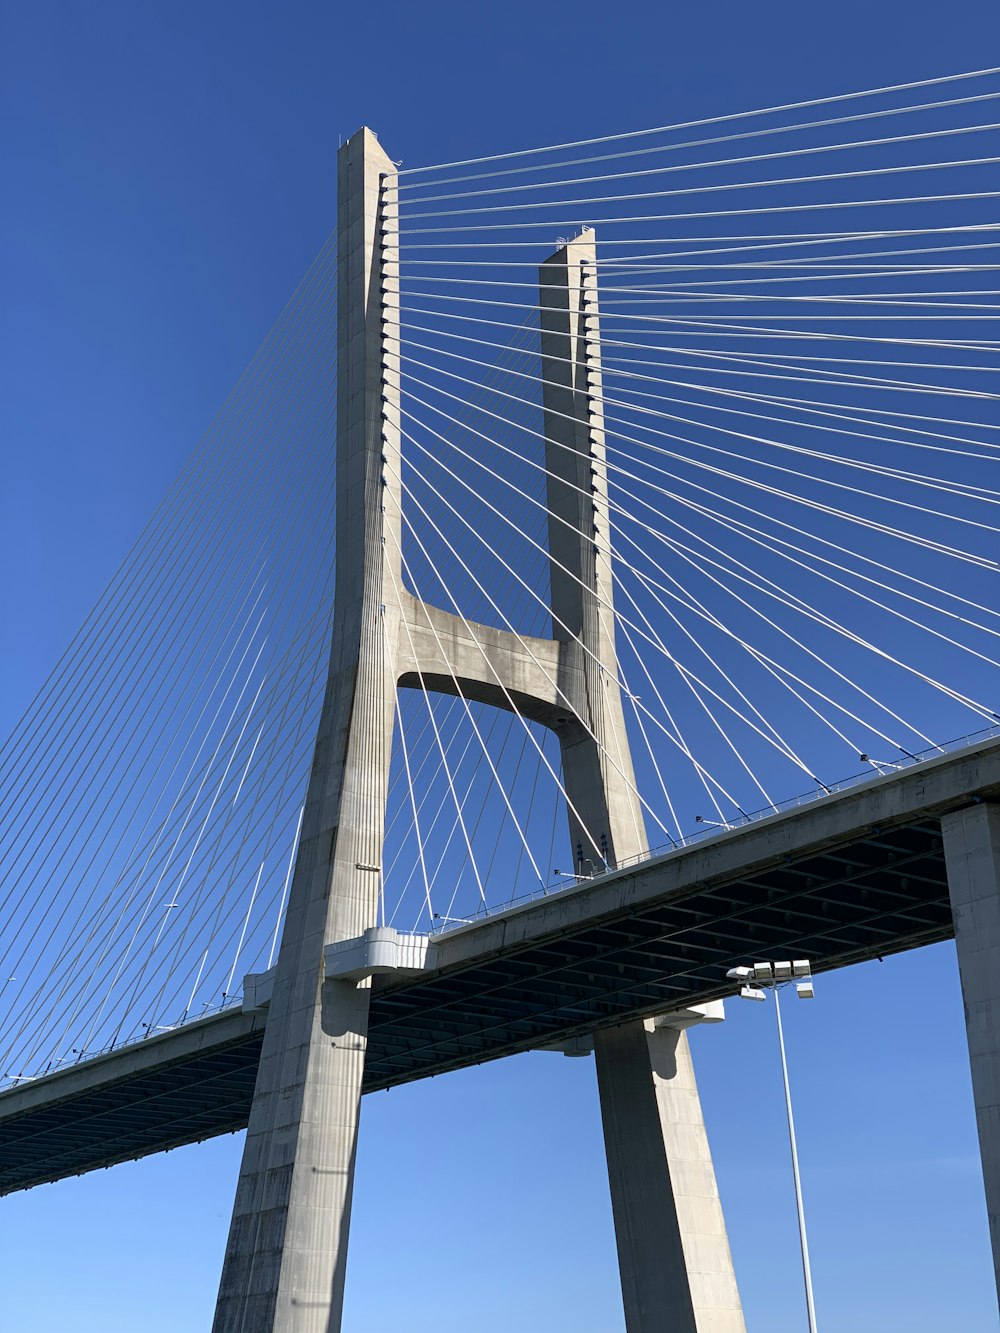 white bridge under blue sky during daytime